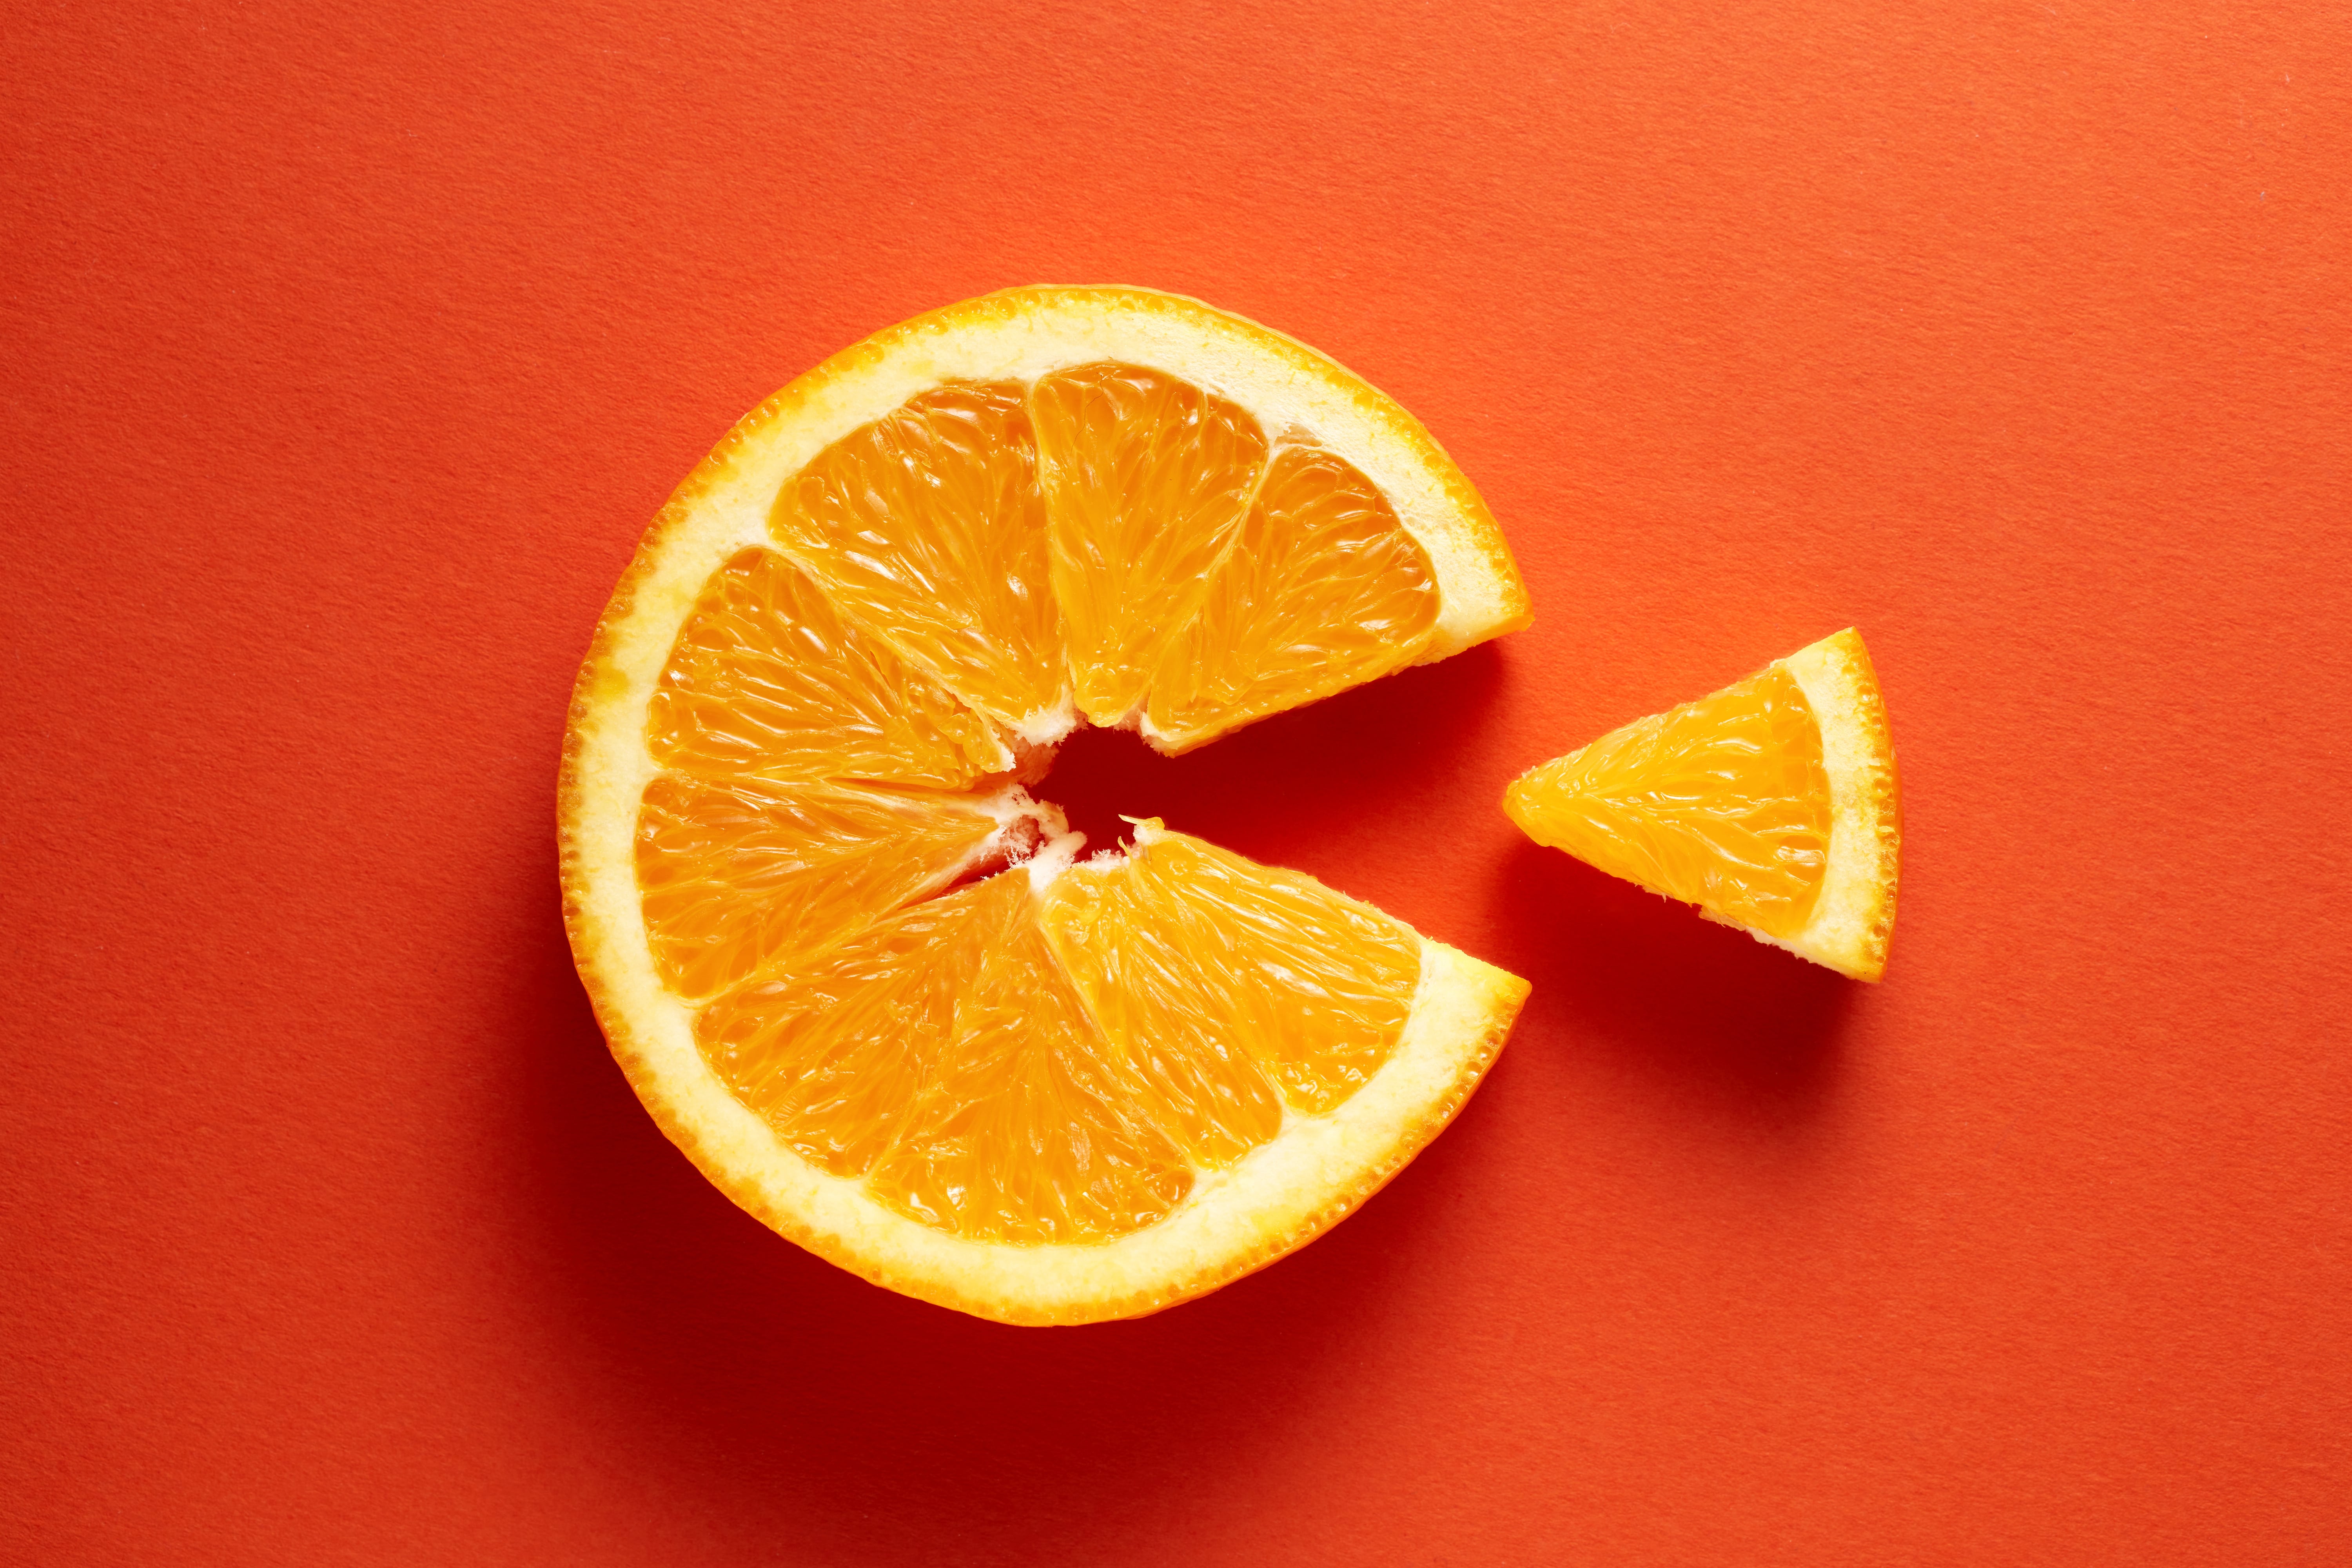 A slice of vitamin C-packed orange set against a bright orange back ground